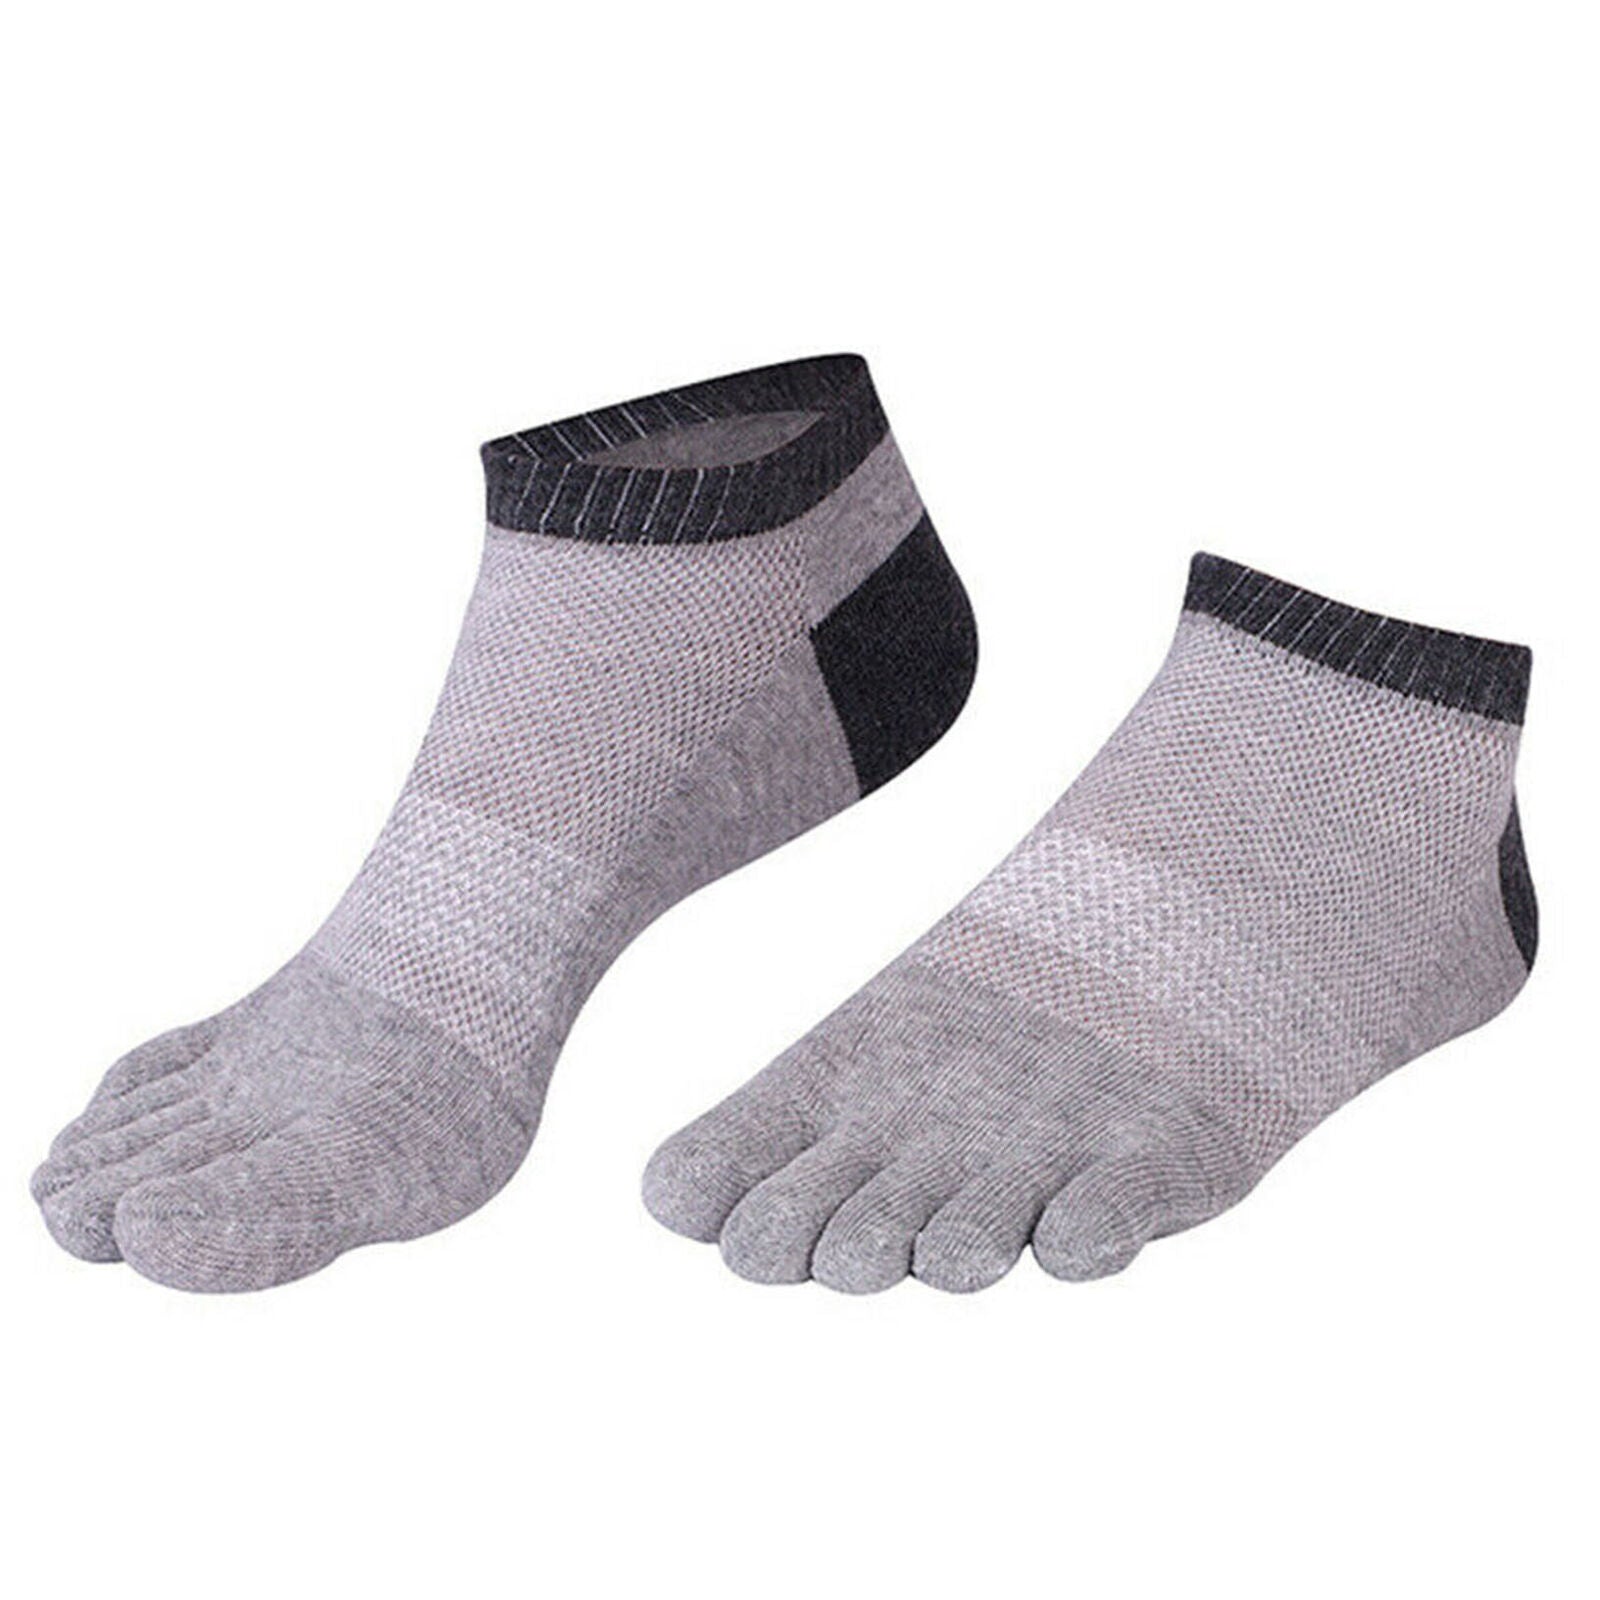 5 pairs of toe socks socks sports yoga sneakers pilates socks men